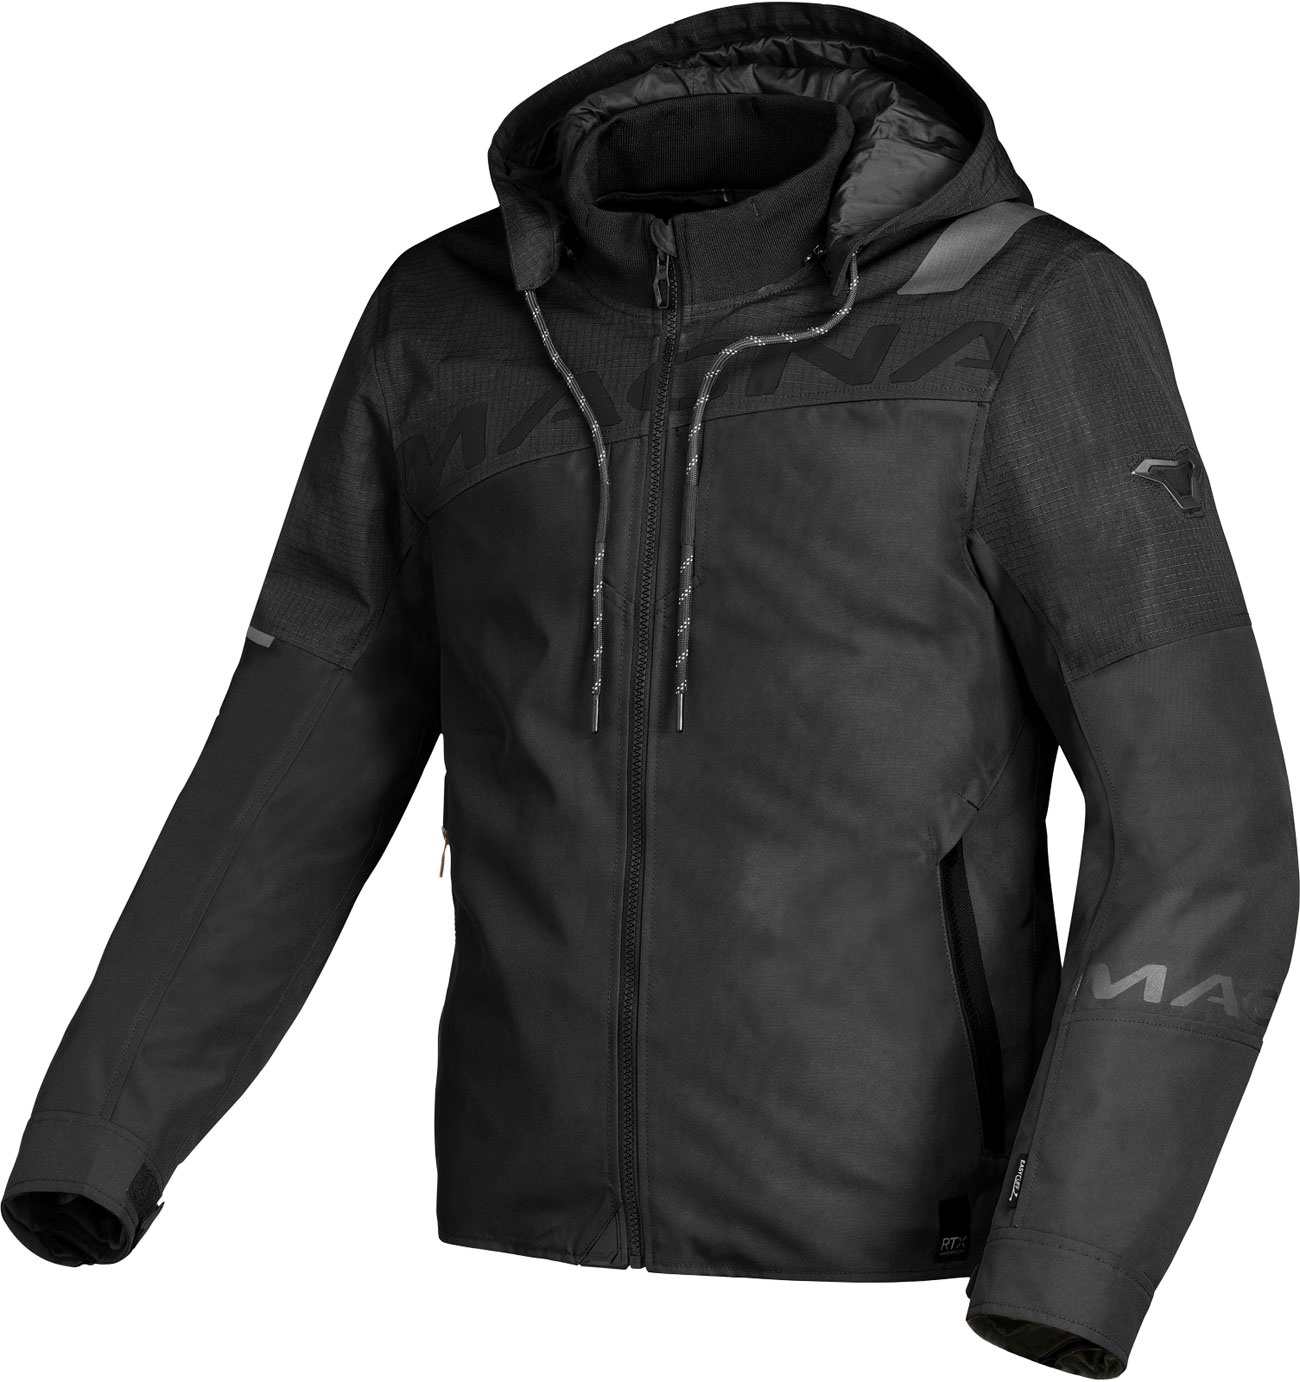 Macna Racoon, veste textile imperméable - Noir - XL